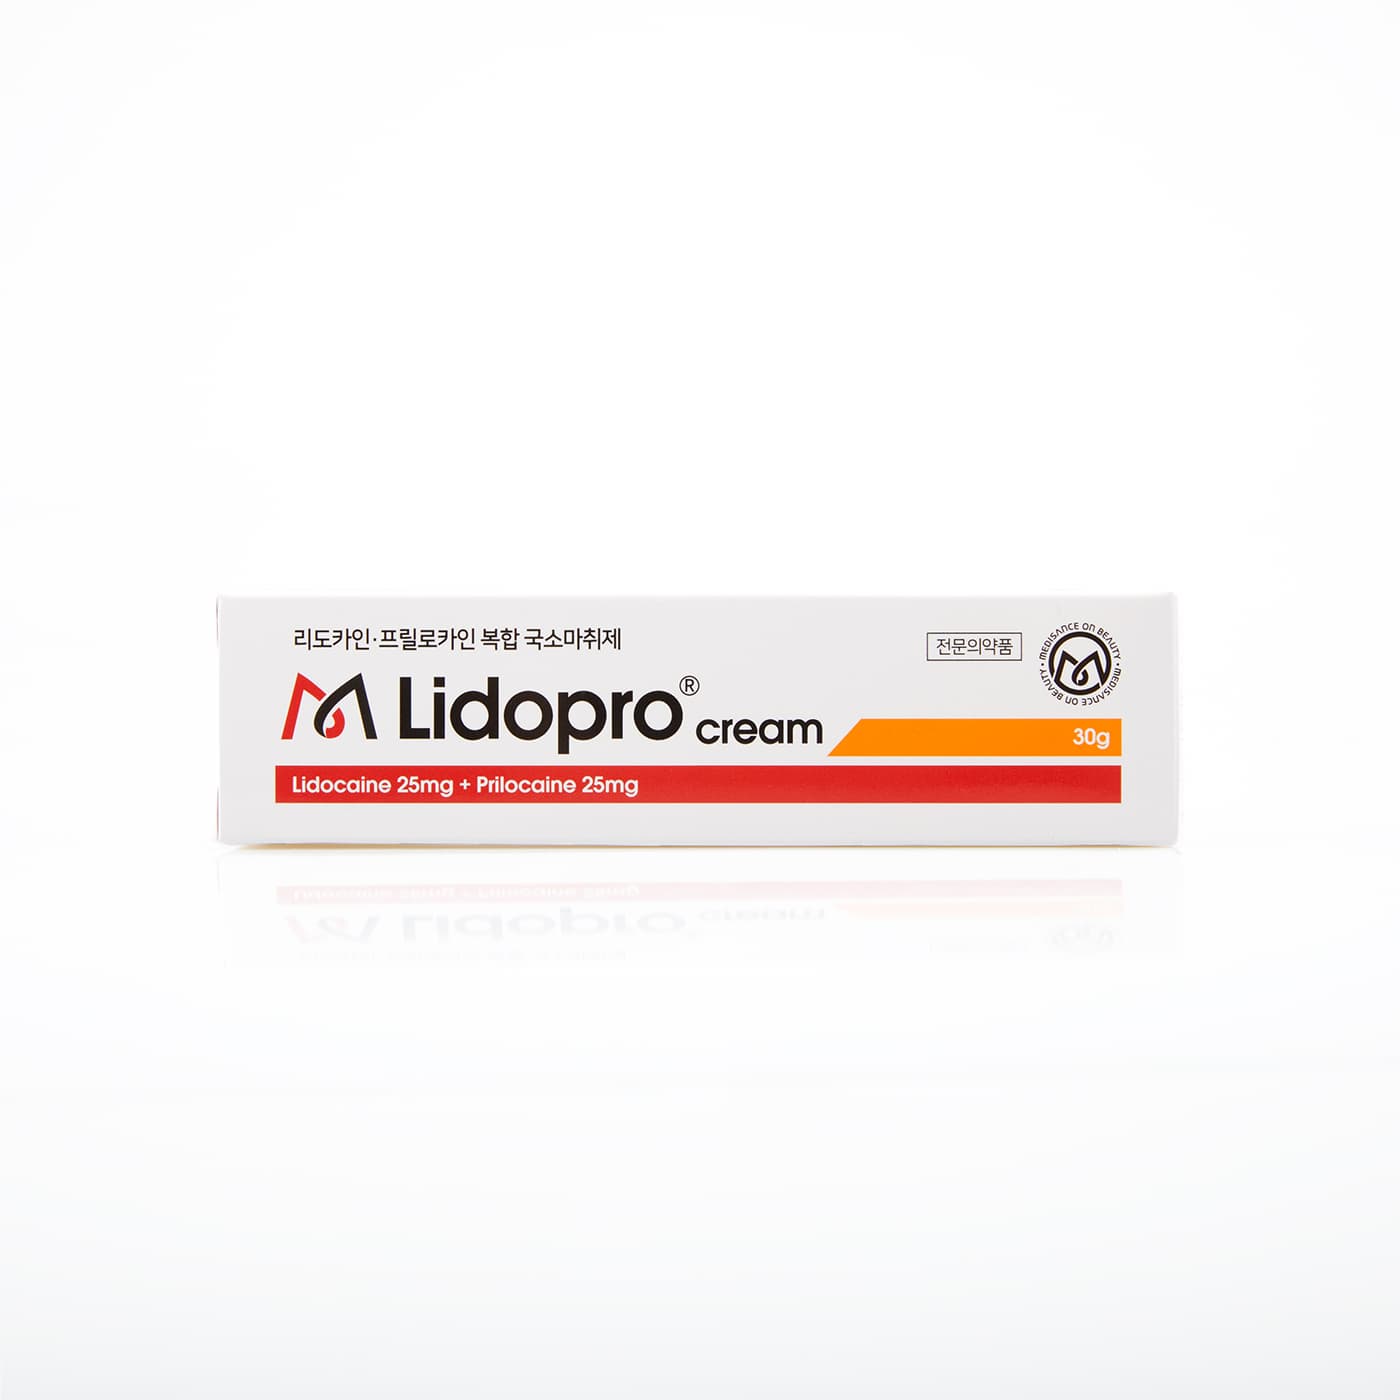 M Lidopro Cream